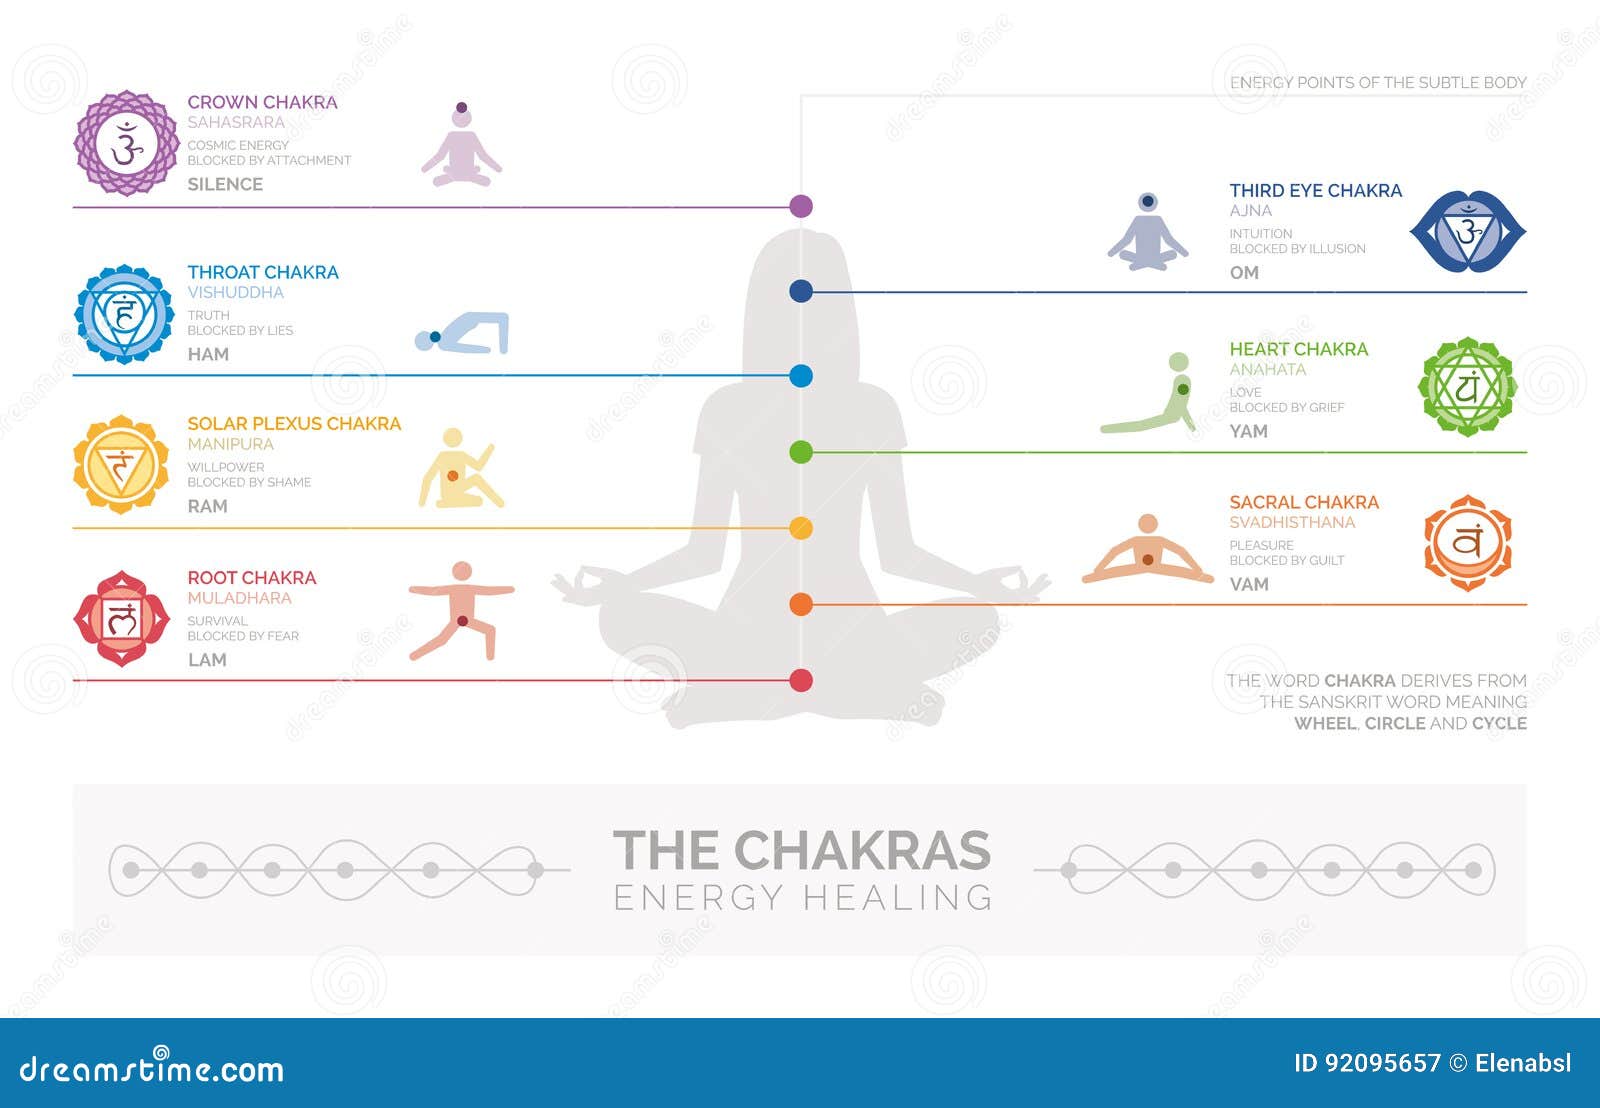 chakras and energy healing